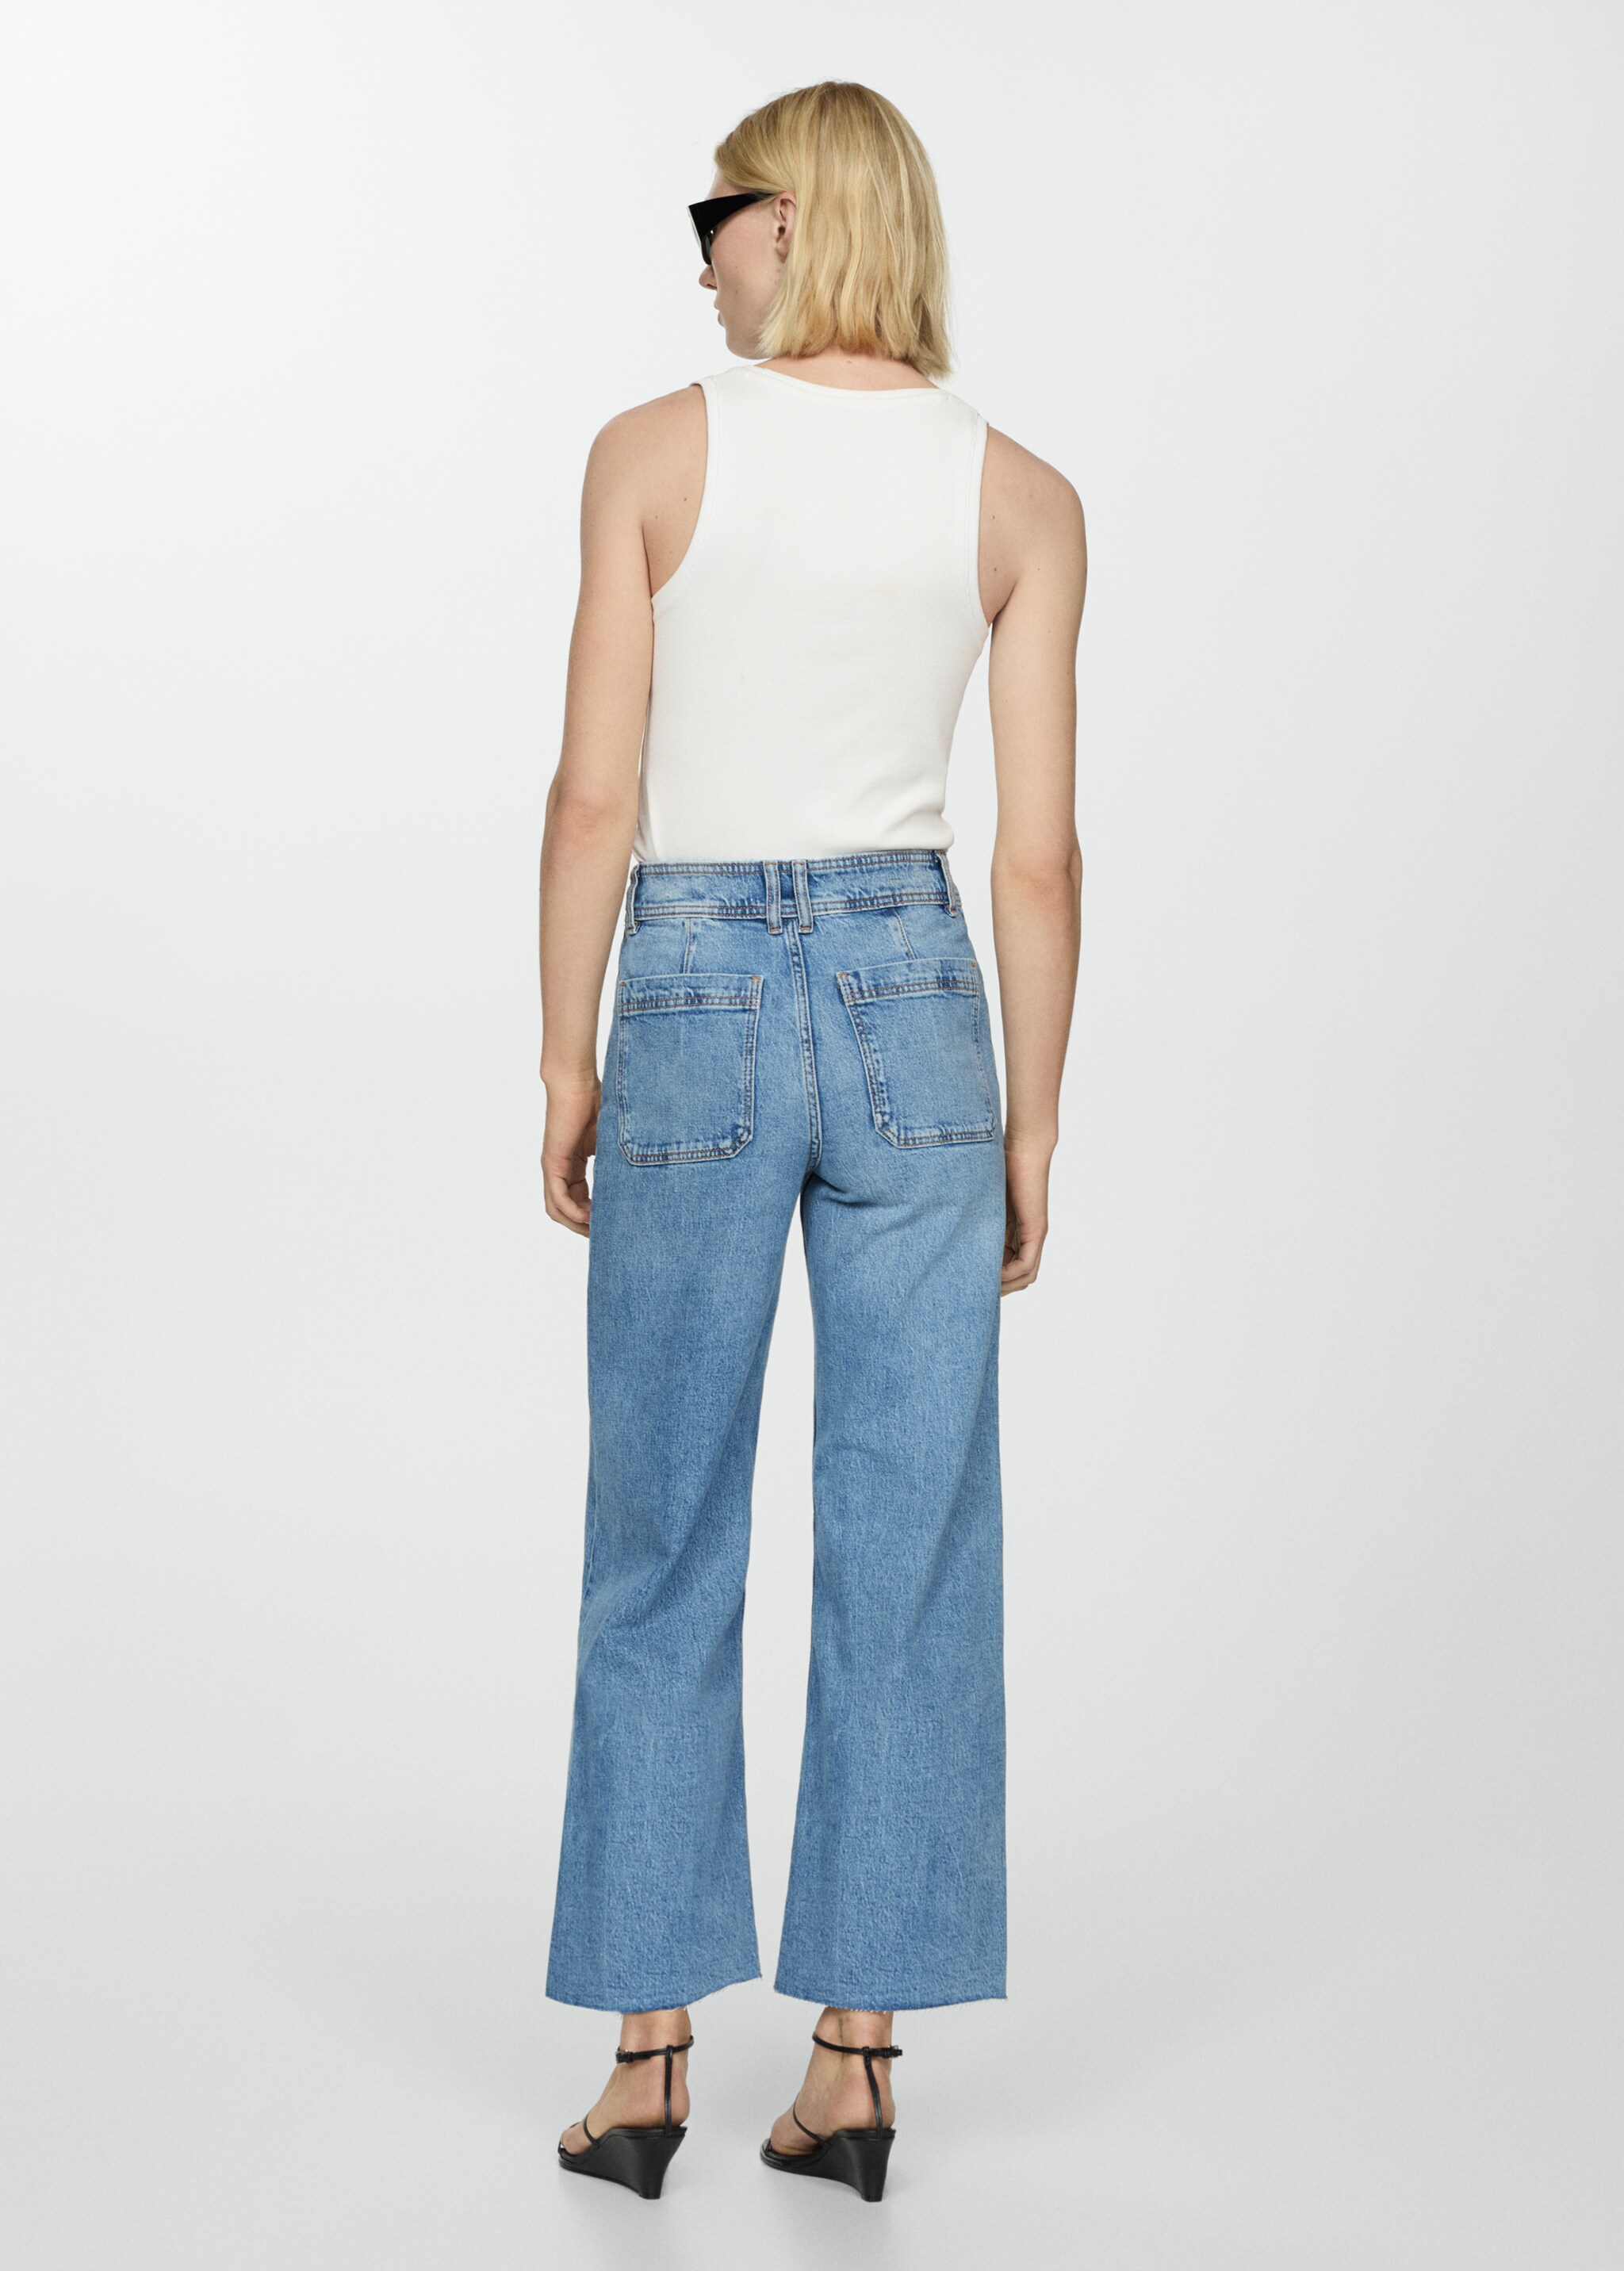 Jeans Catherin culotte tiro alto - Reverso del artículo